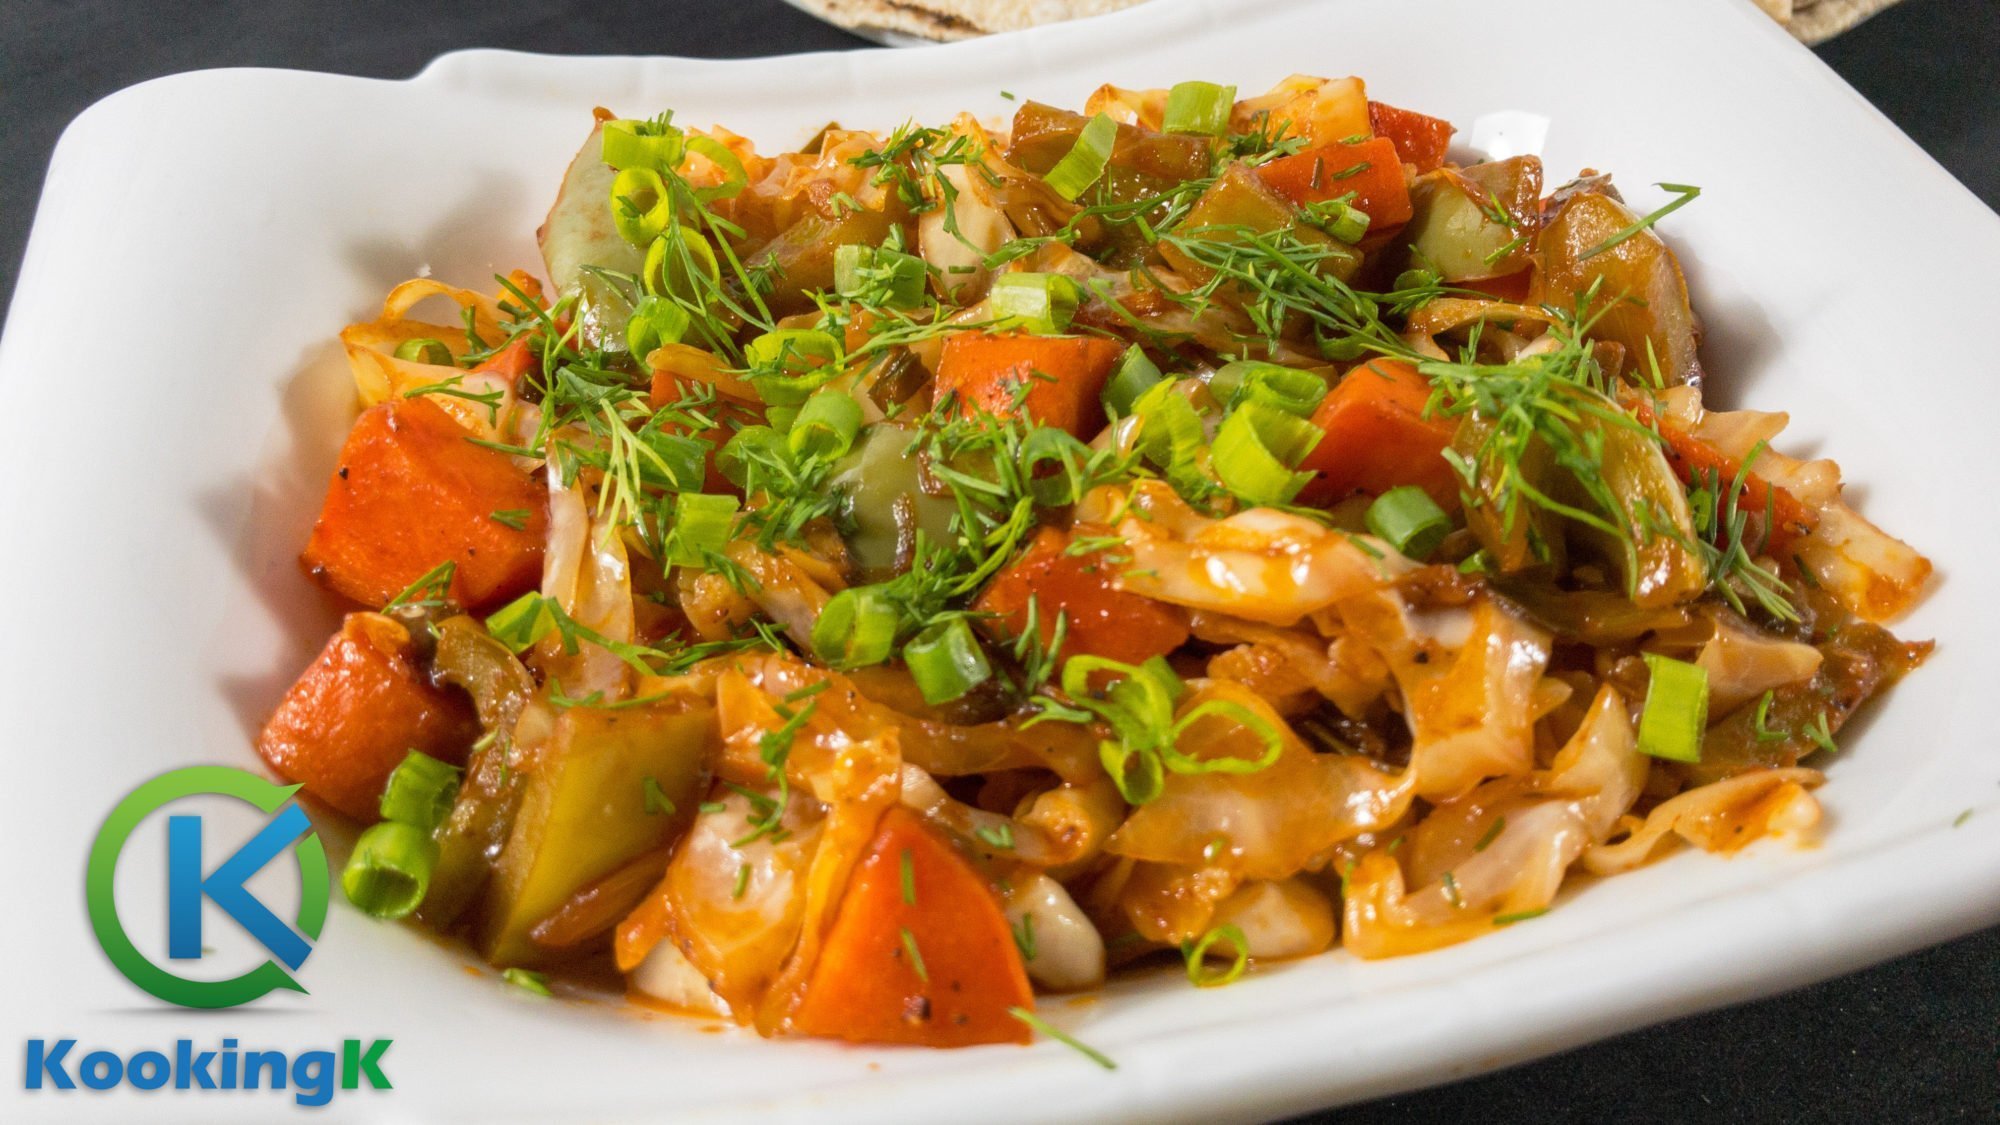 Stir Fry Vegetables Chinese Style Recipe by KooKingK